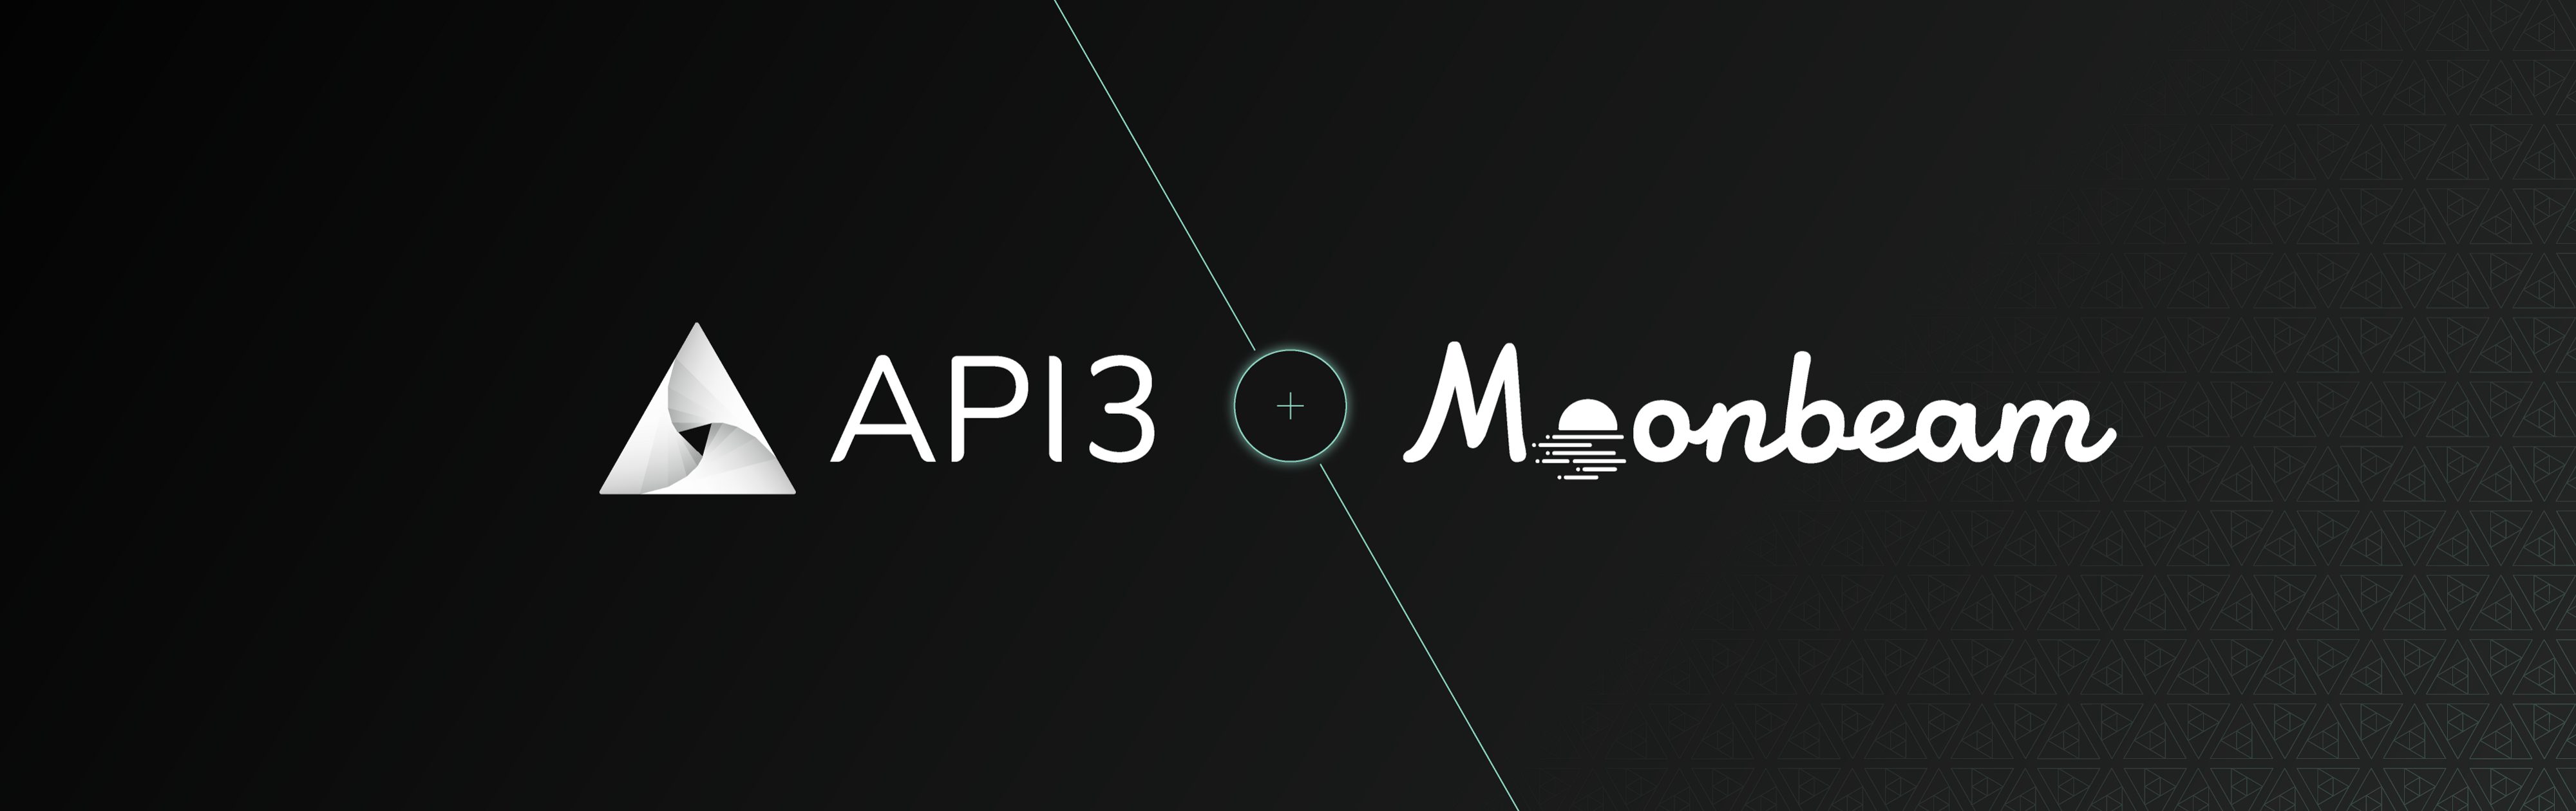 API3 and Moonbeam Bring Off-Chain APIs to Polkadot - Smart ...